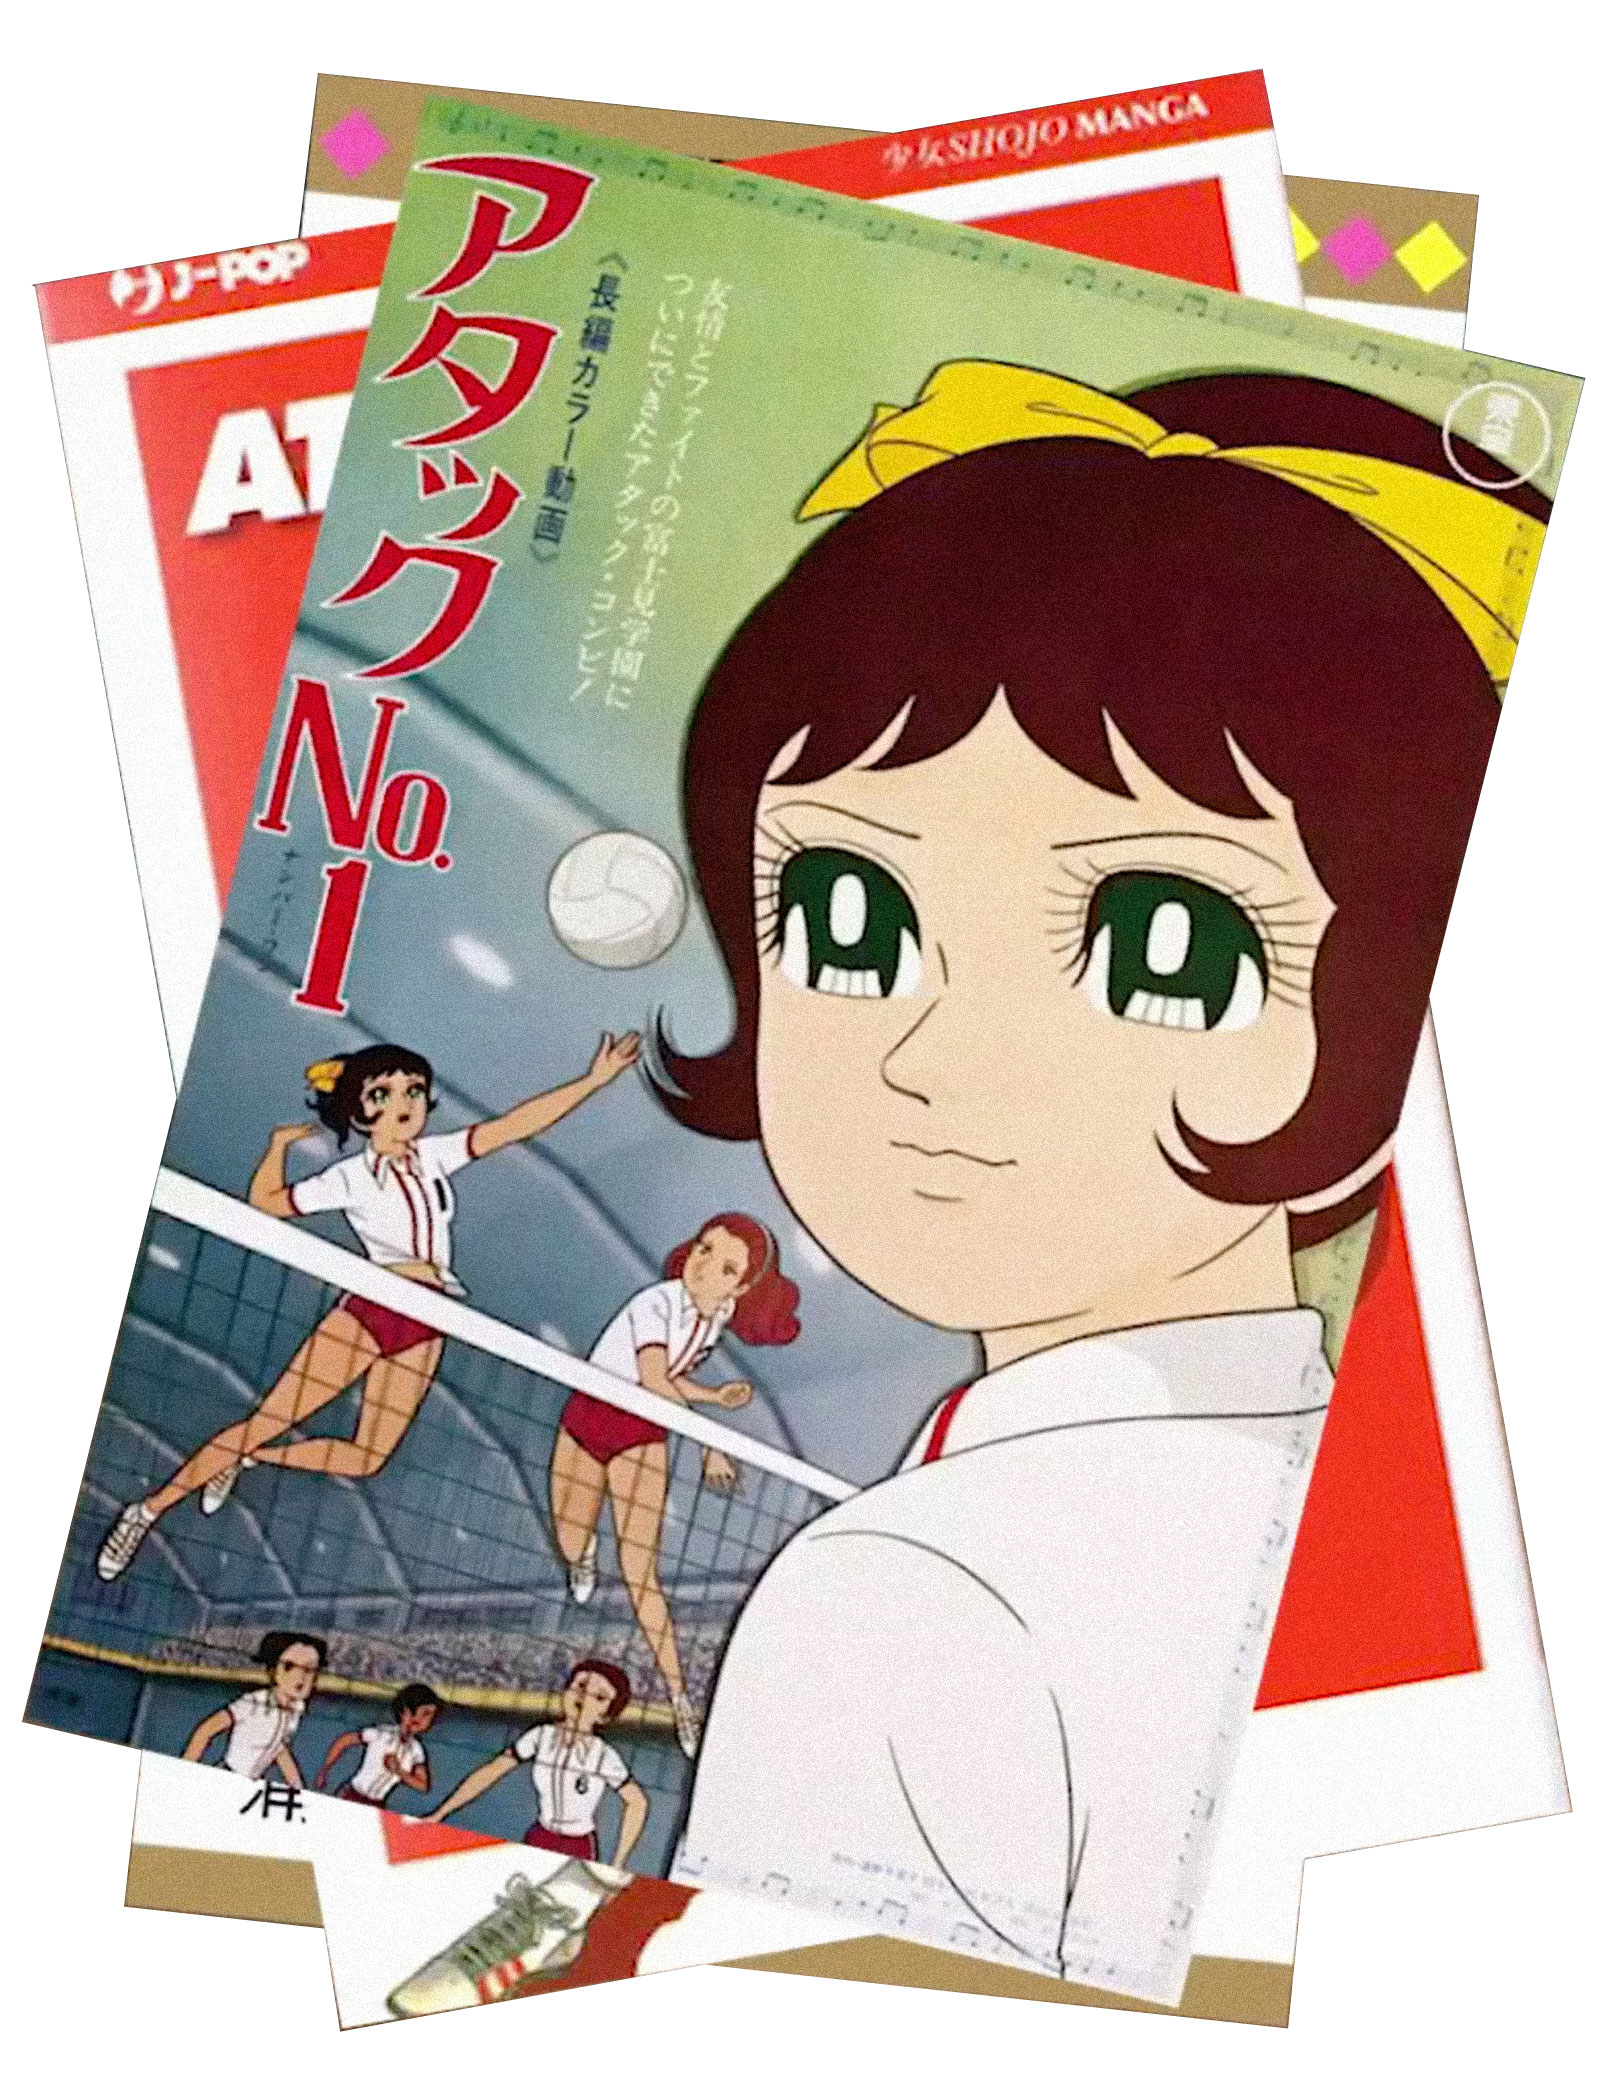 Volleyball manga magazine cover